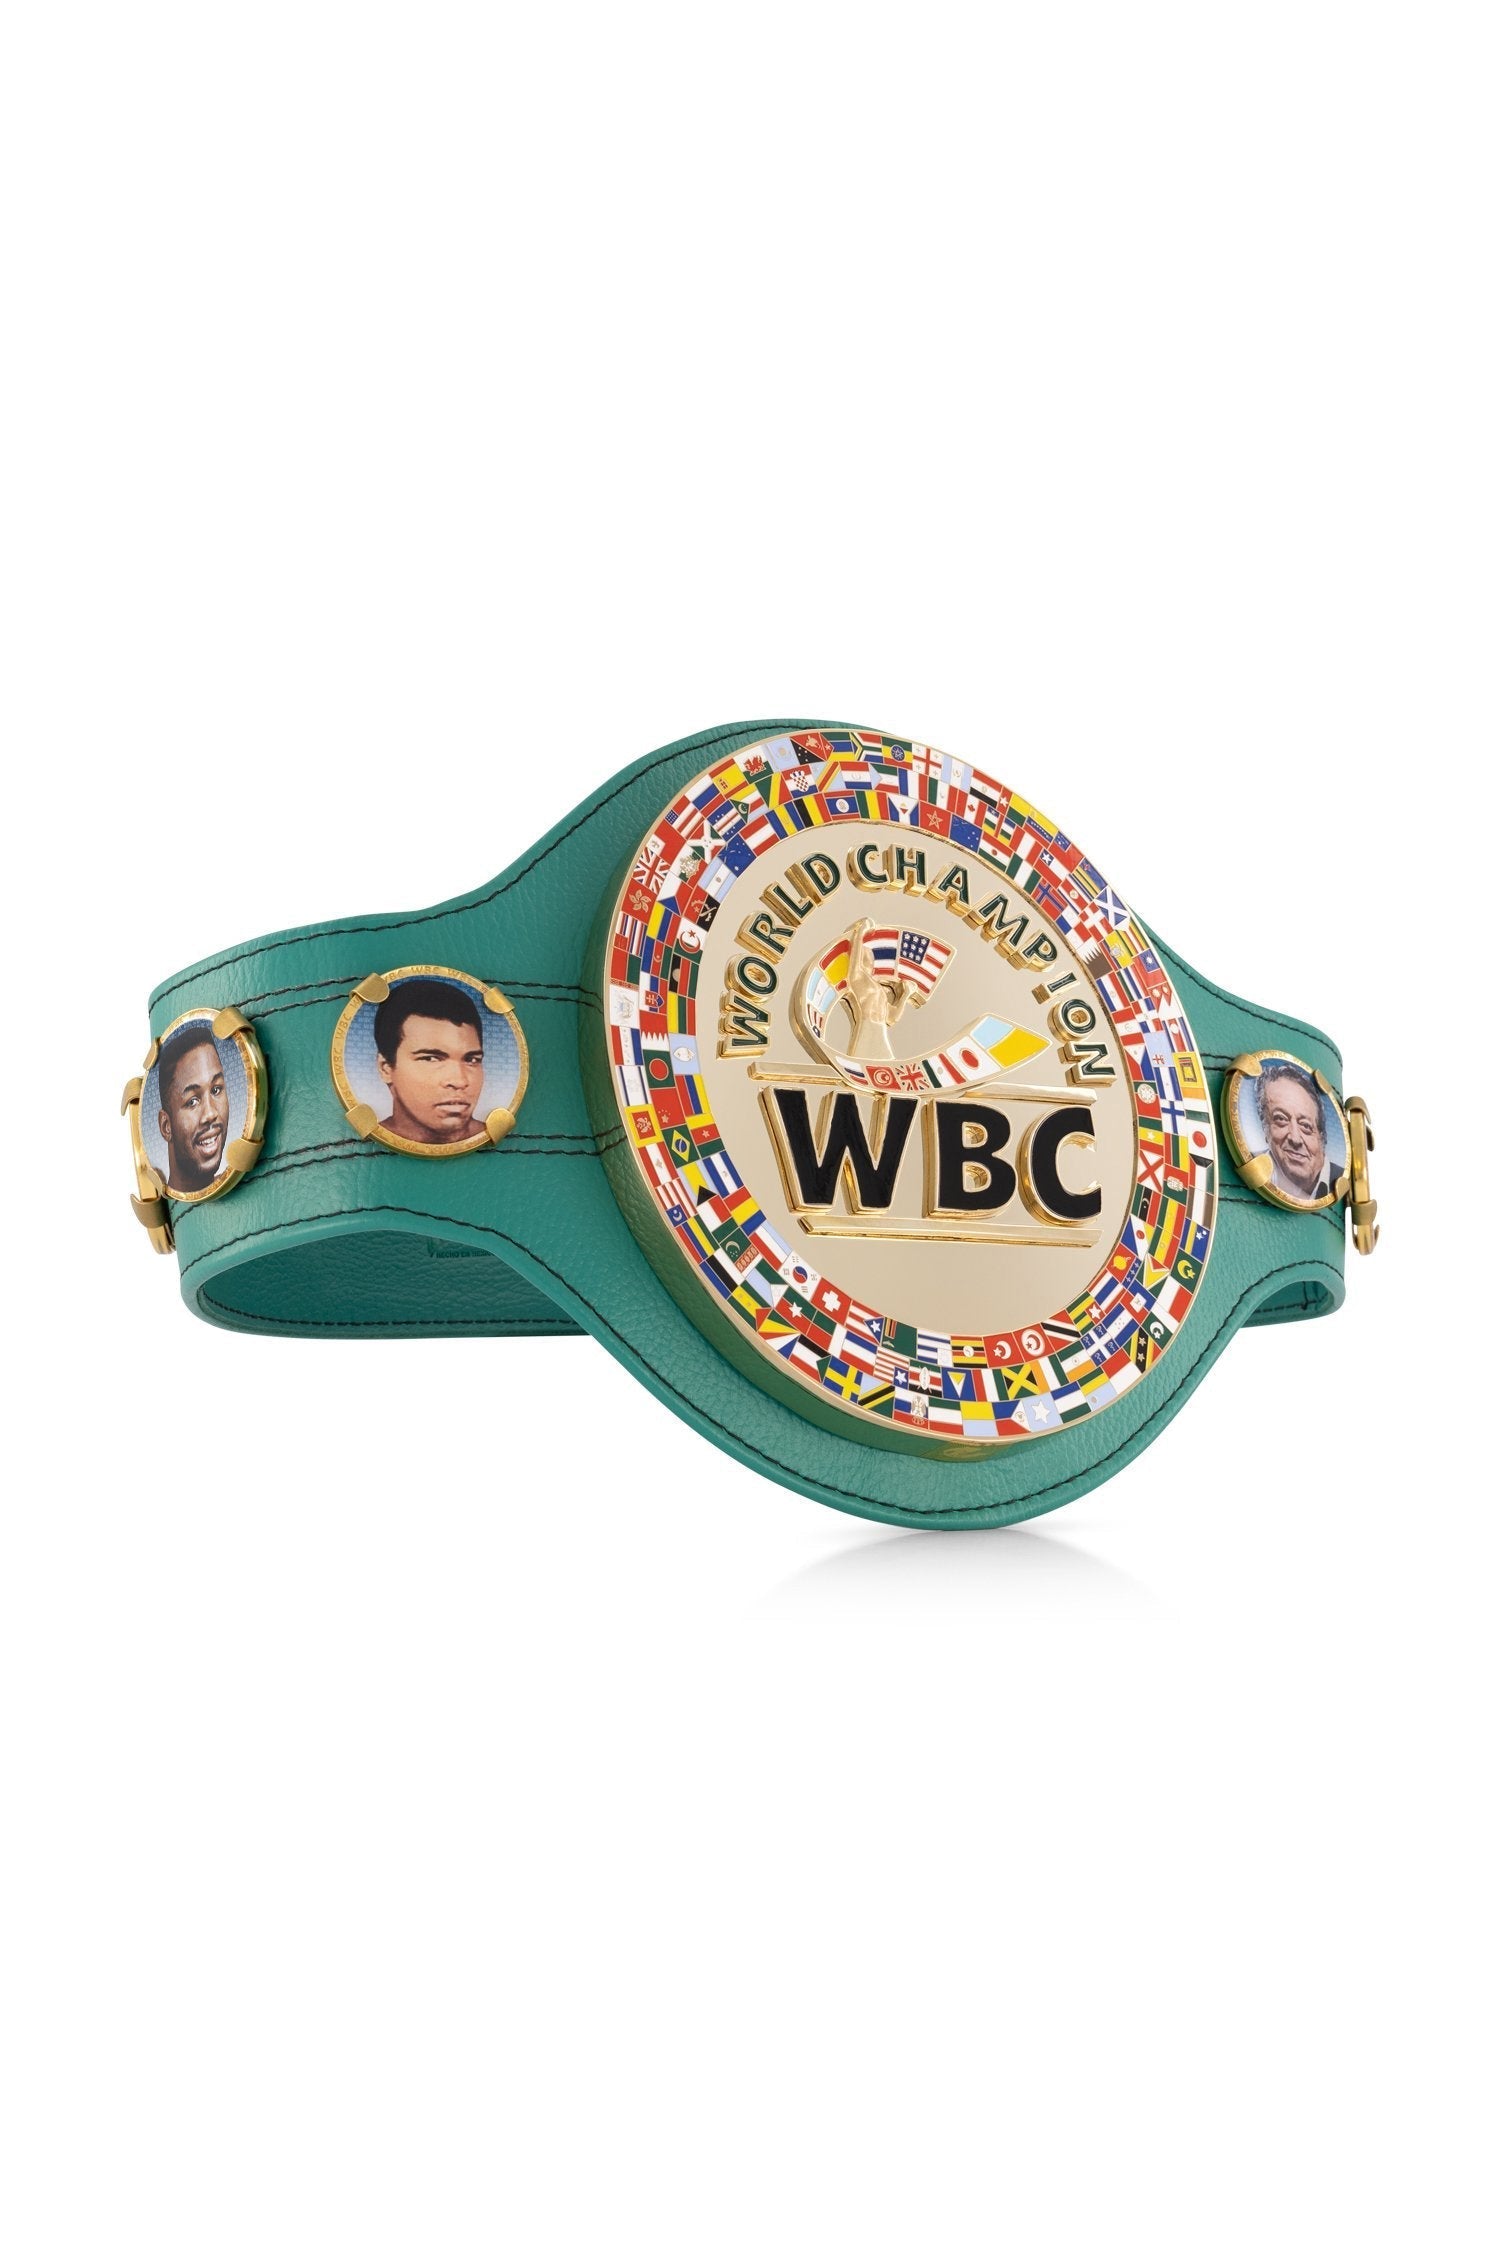 WBC Store Replica Belts WBC Championship Belt  "Historic Fights" Lennox Lewis vs. Vitali Klitschko